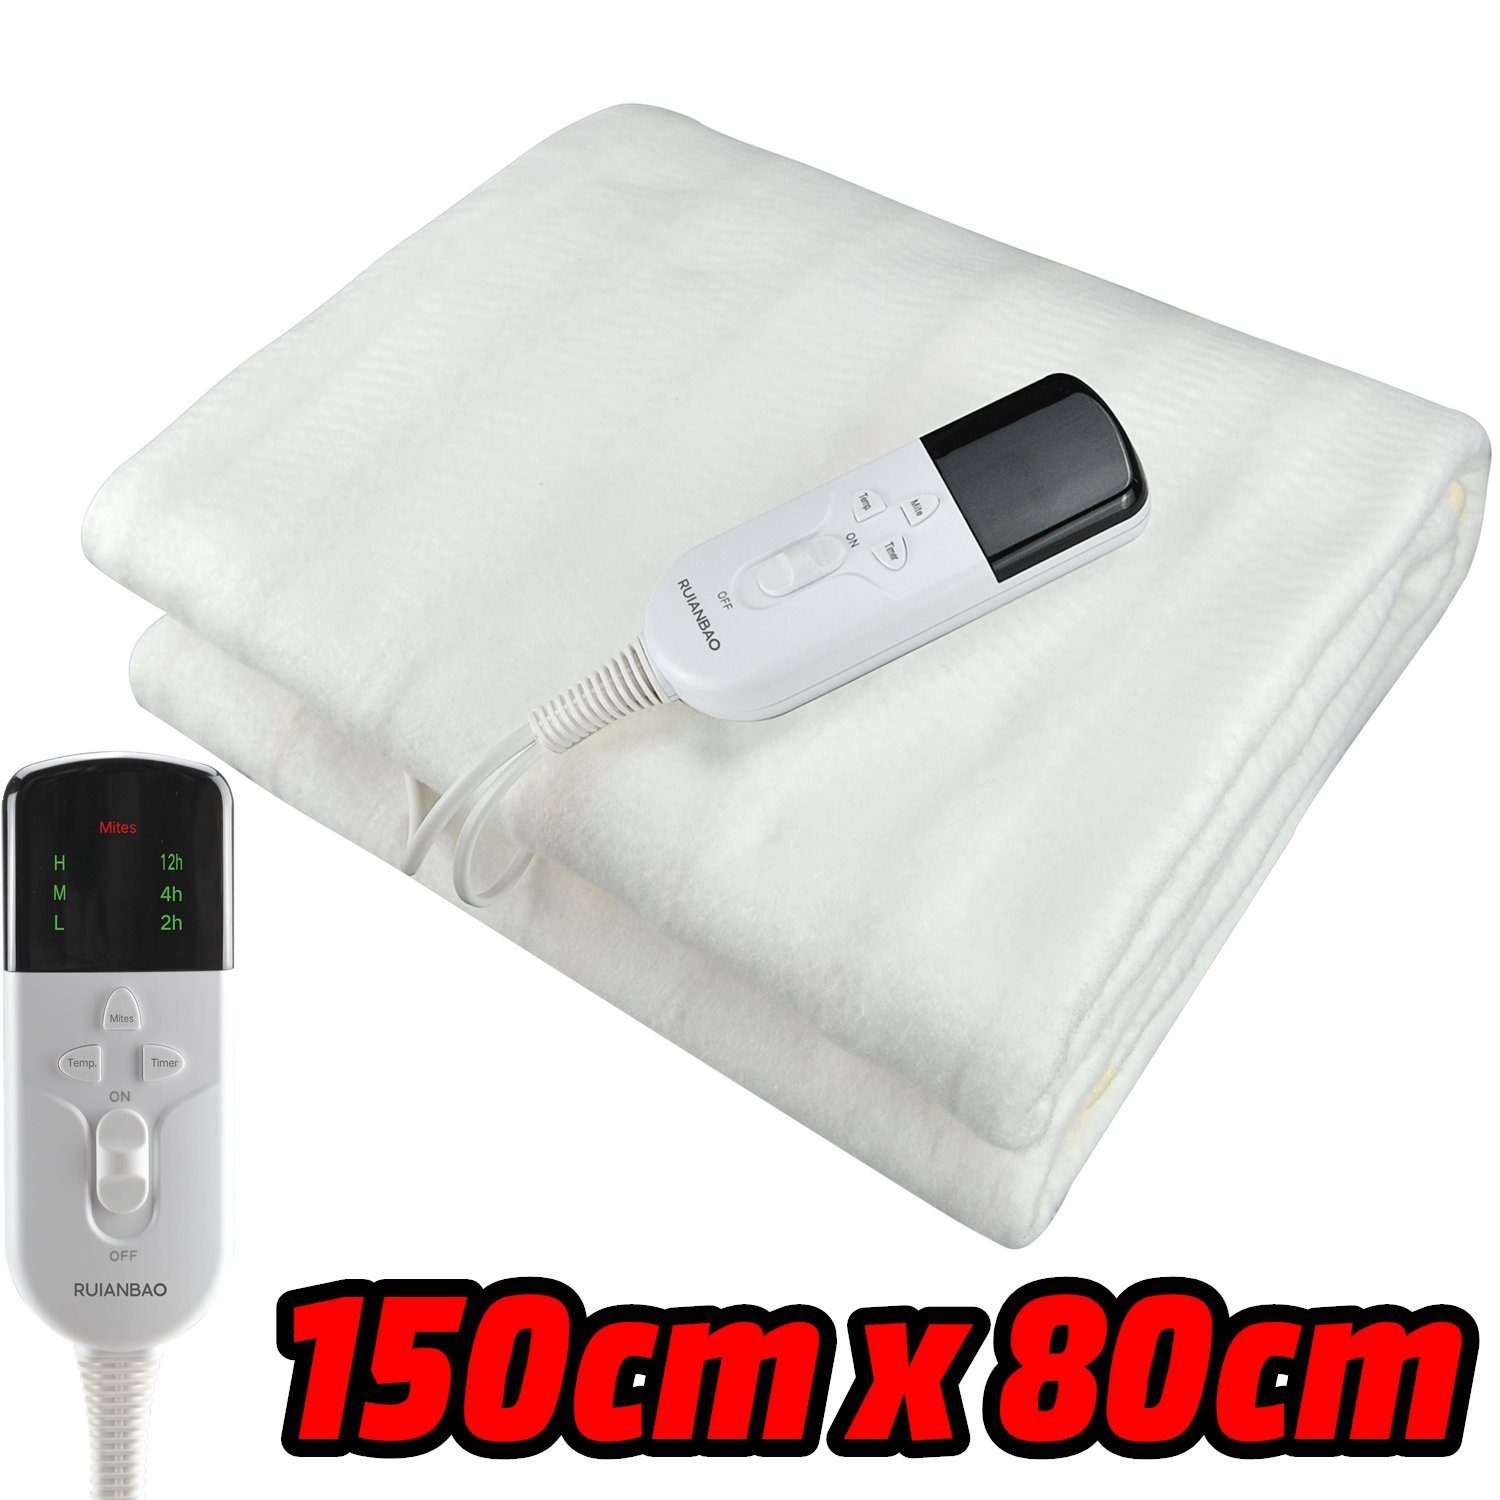 Heizdecke Elektrische Wärmedecke Wärme Heizung Wärmebett Bett Decke